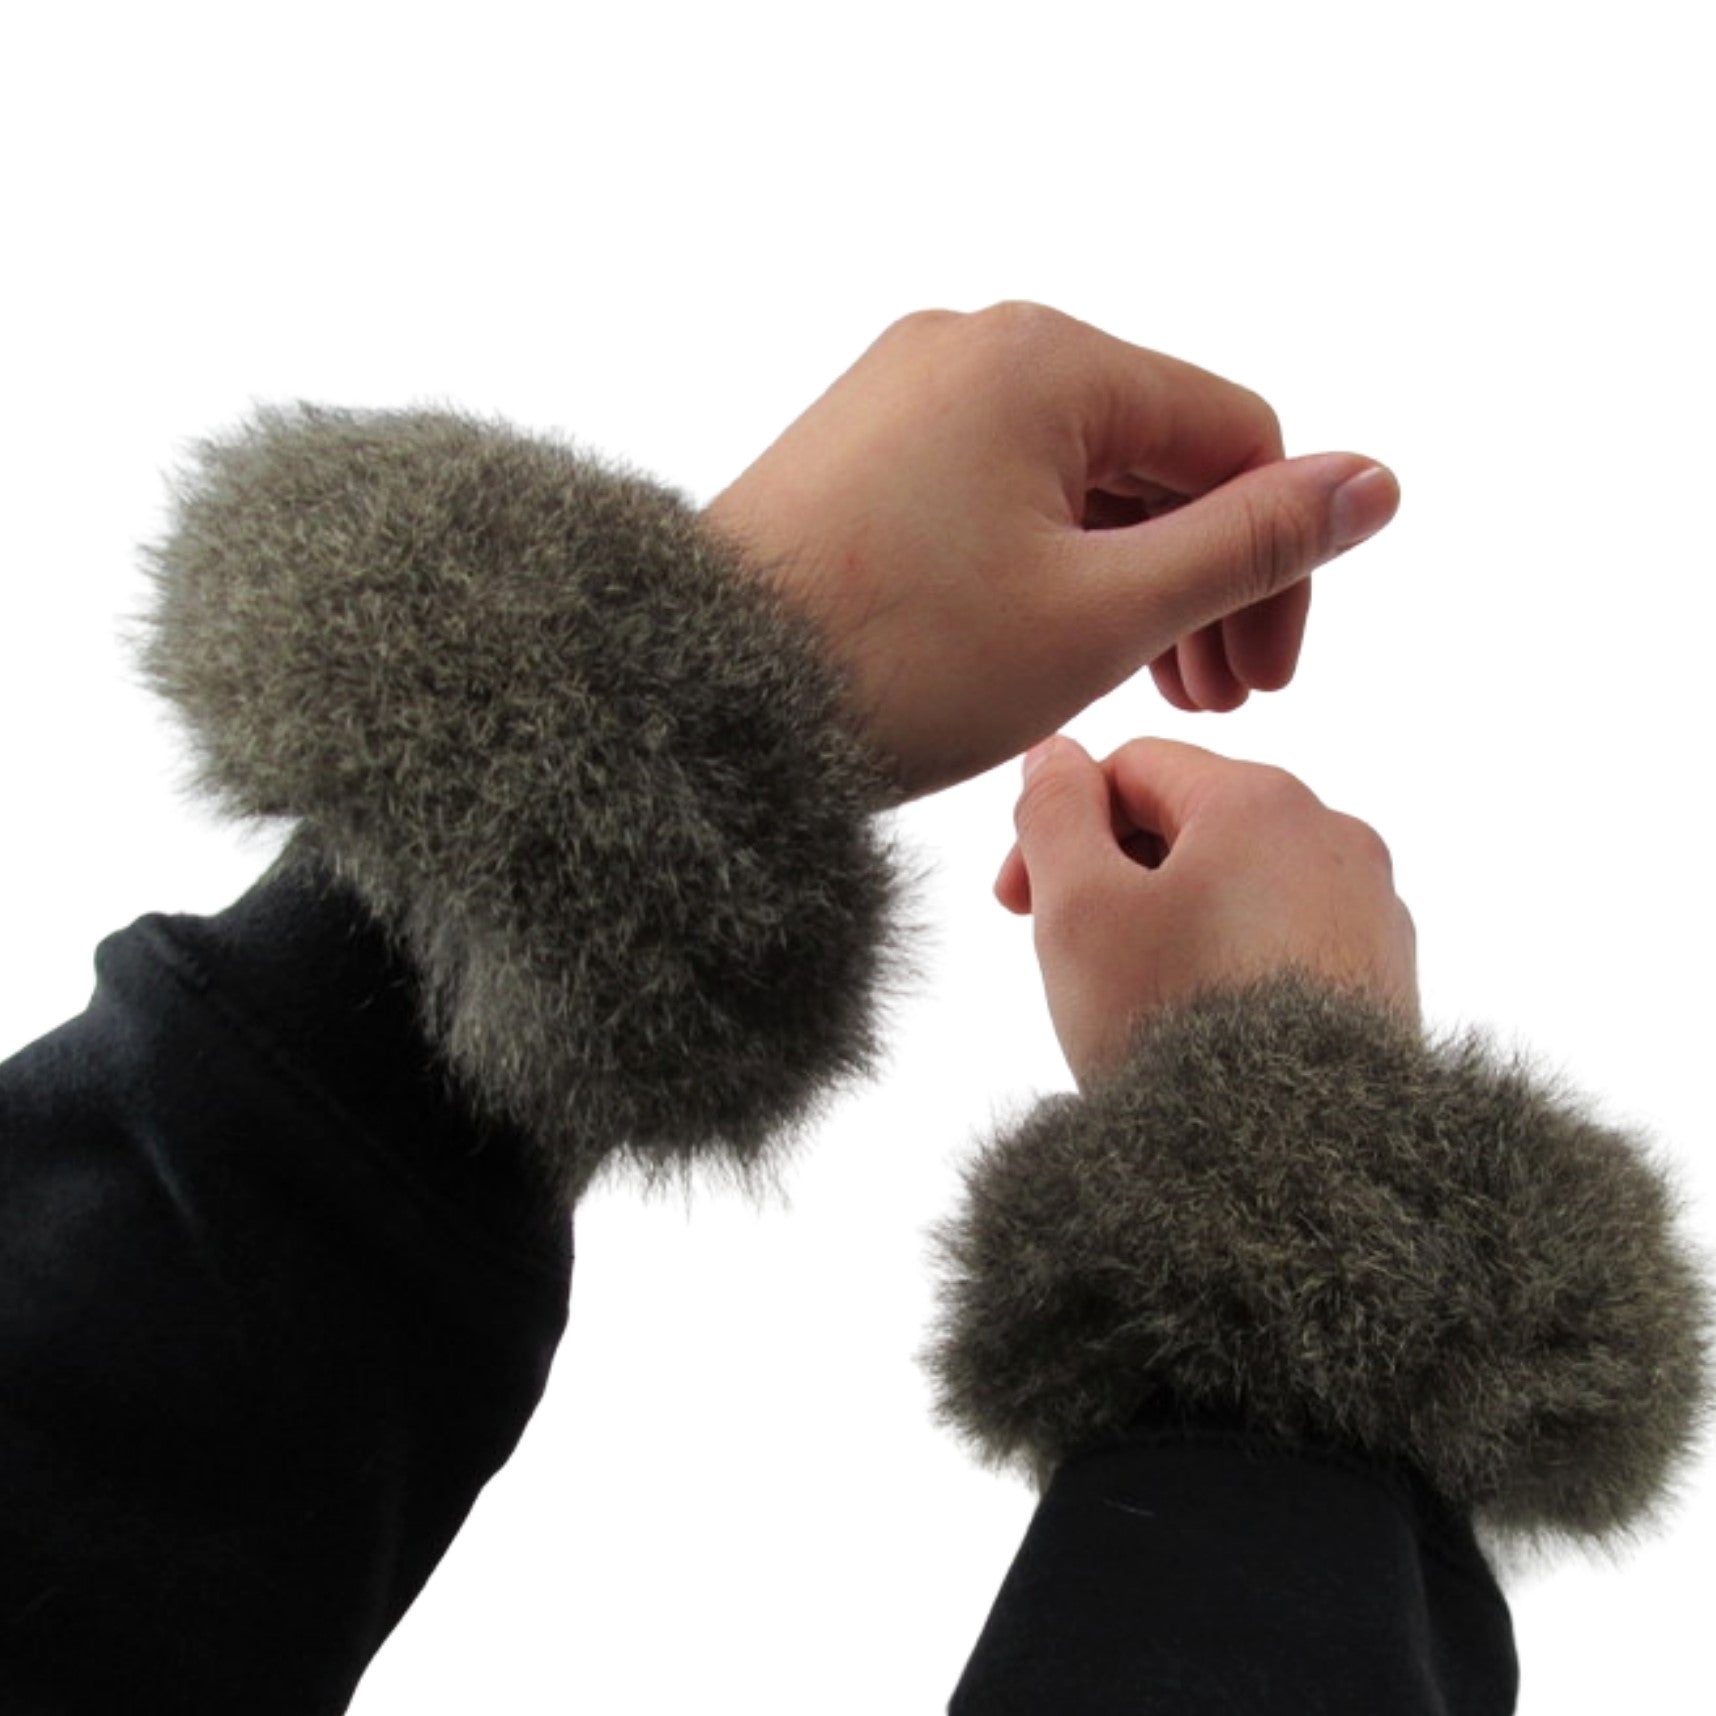 Wrist Cuffs made from possum fur